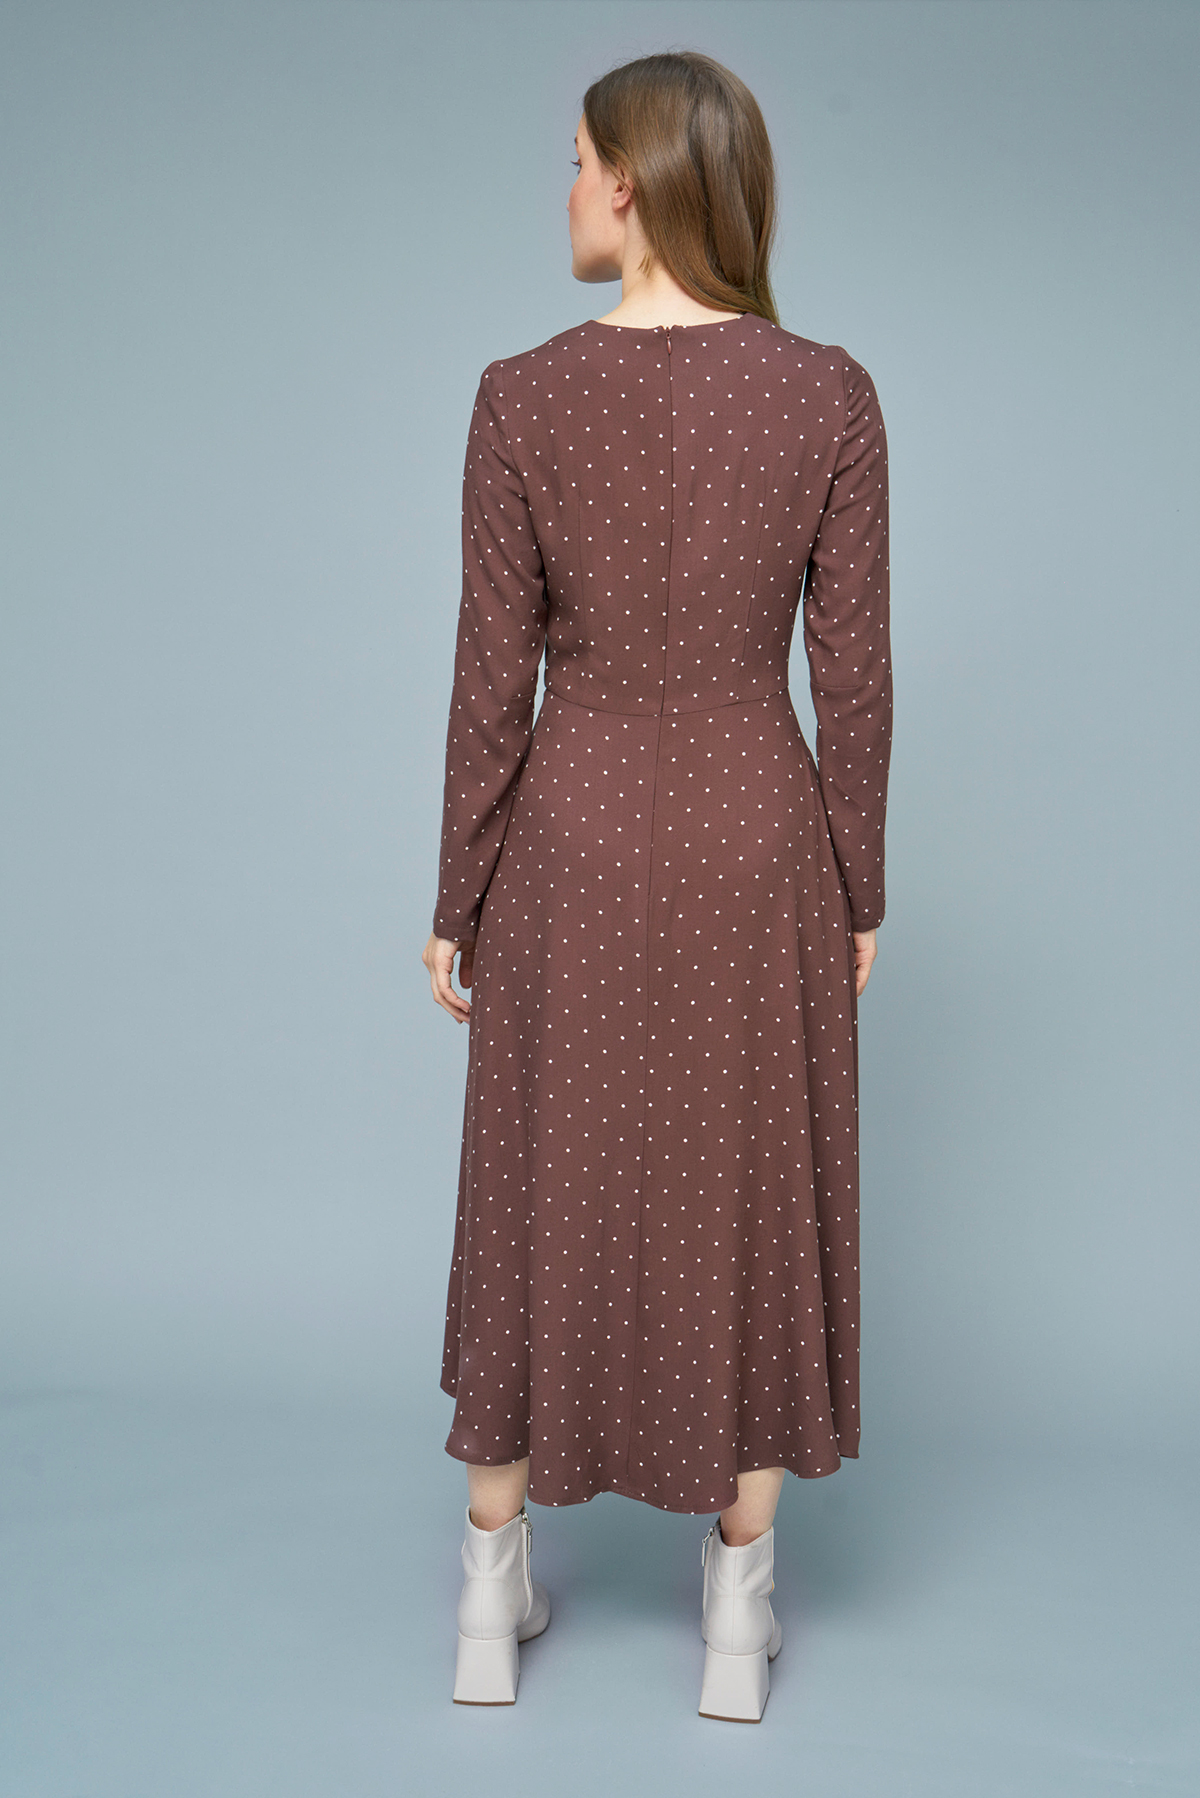 Brown midi dress with print, photo 3